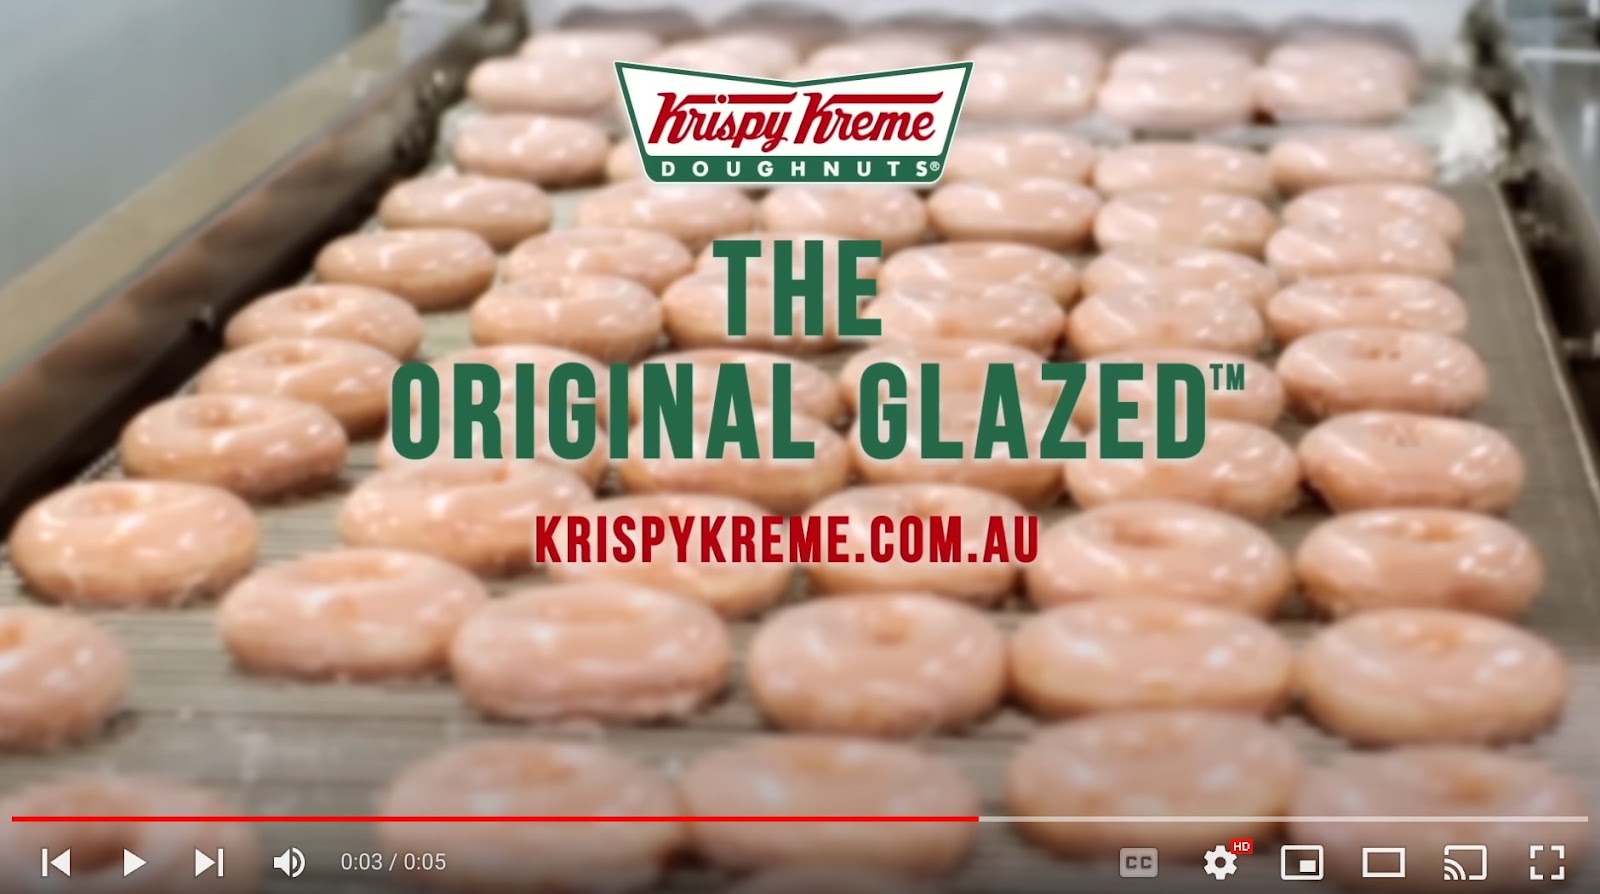 Krispy Kreme's bumper ad on YouTube